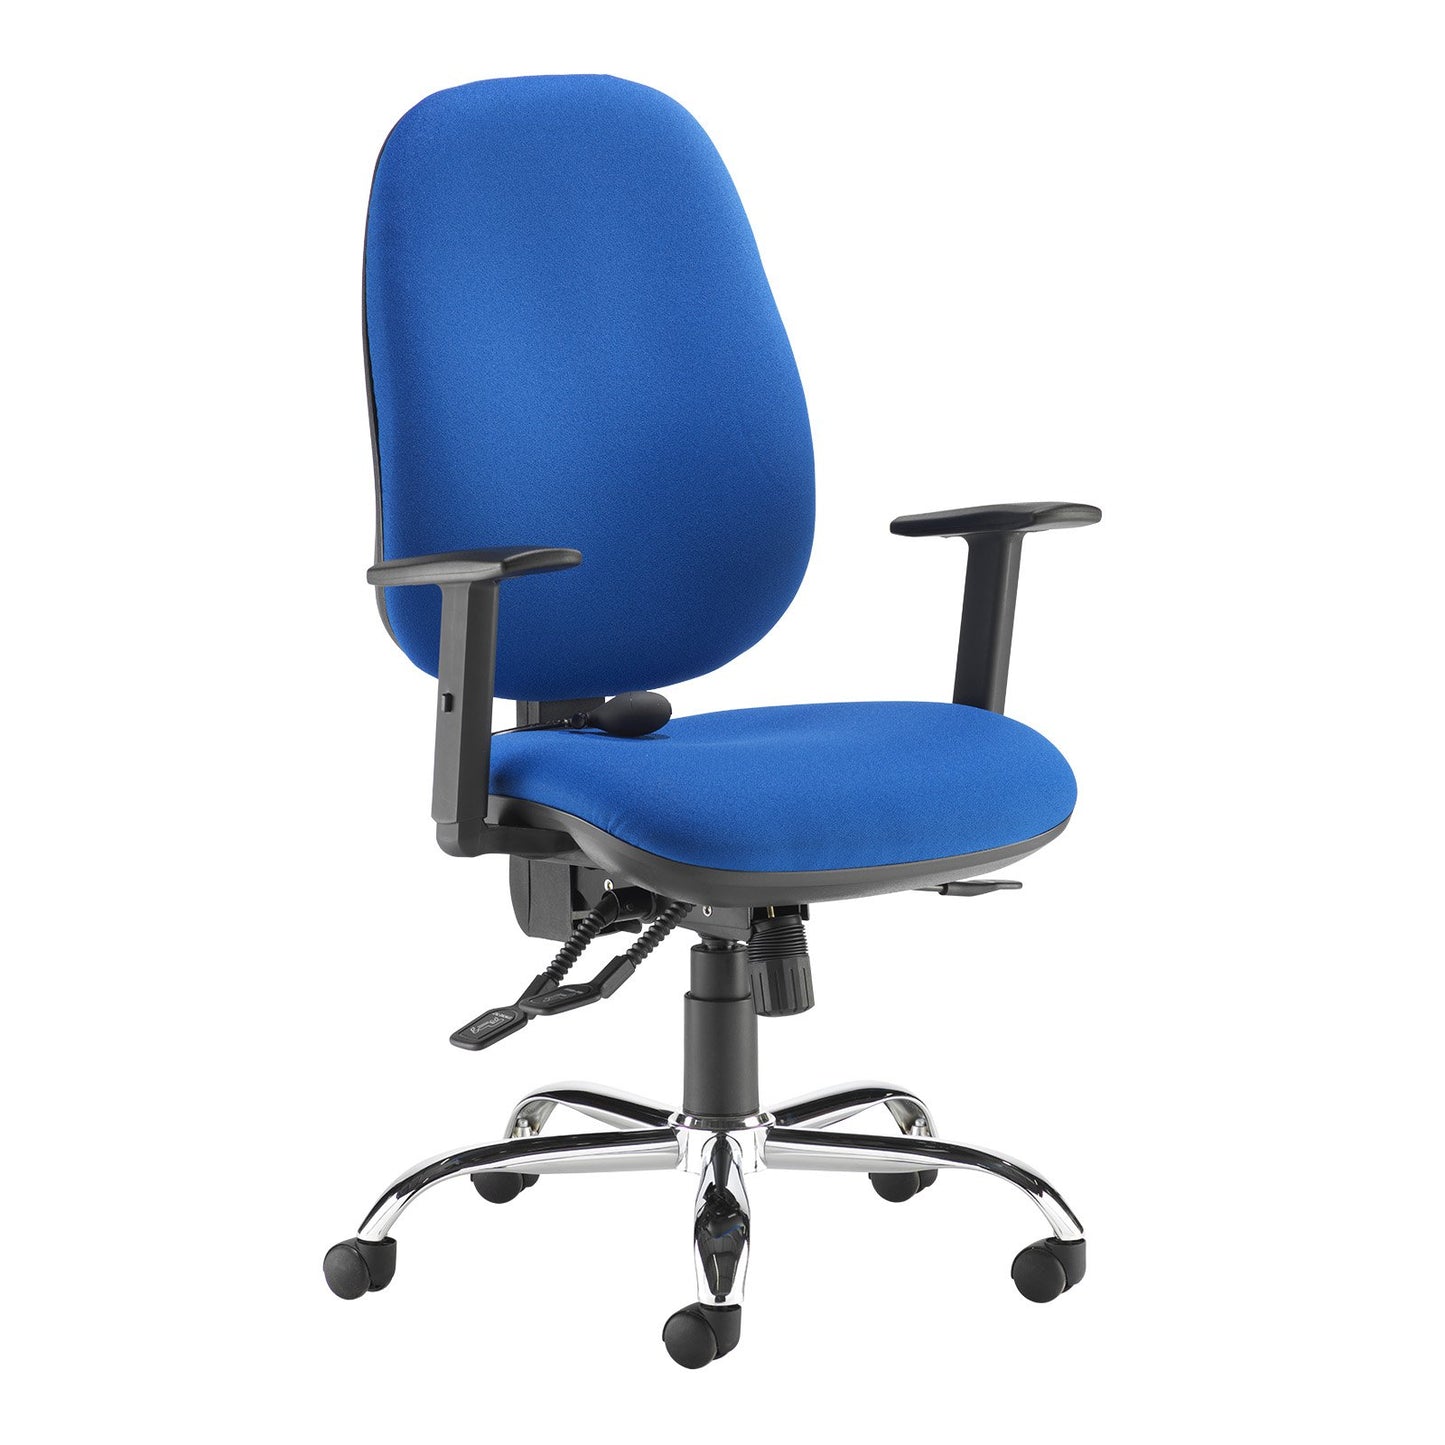 Jota Ergo 24hr ergonomic task chair